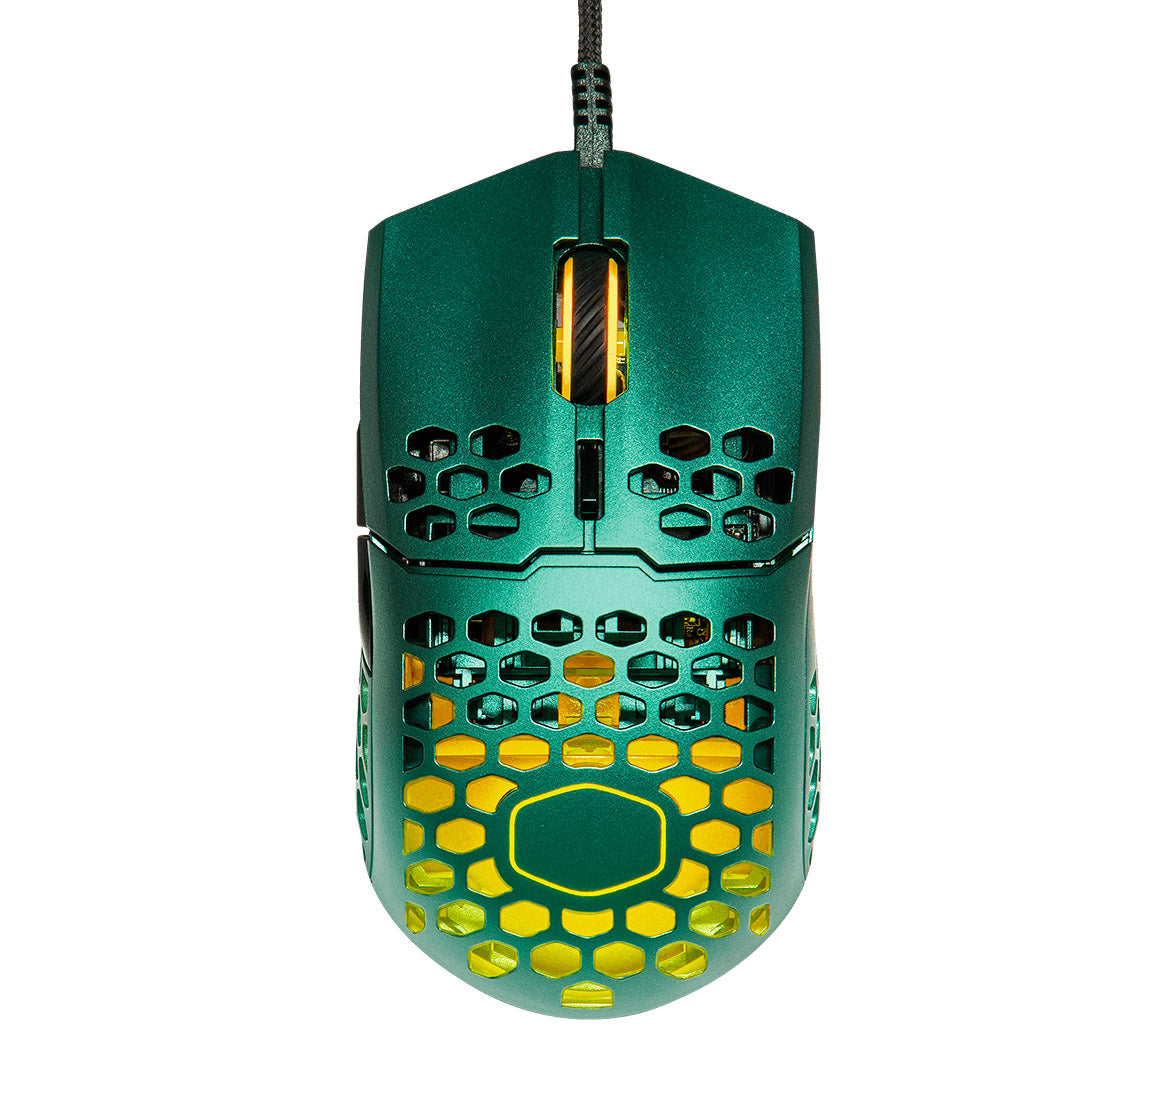 Cooler Master MM711 Olive Green Lightweight Gaming Mouse W/ Honeycomb Shell MKVITUMX2V |0|